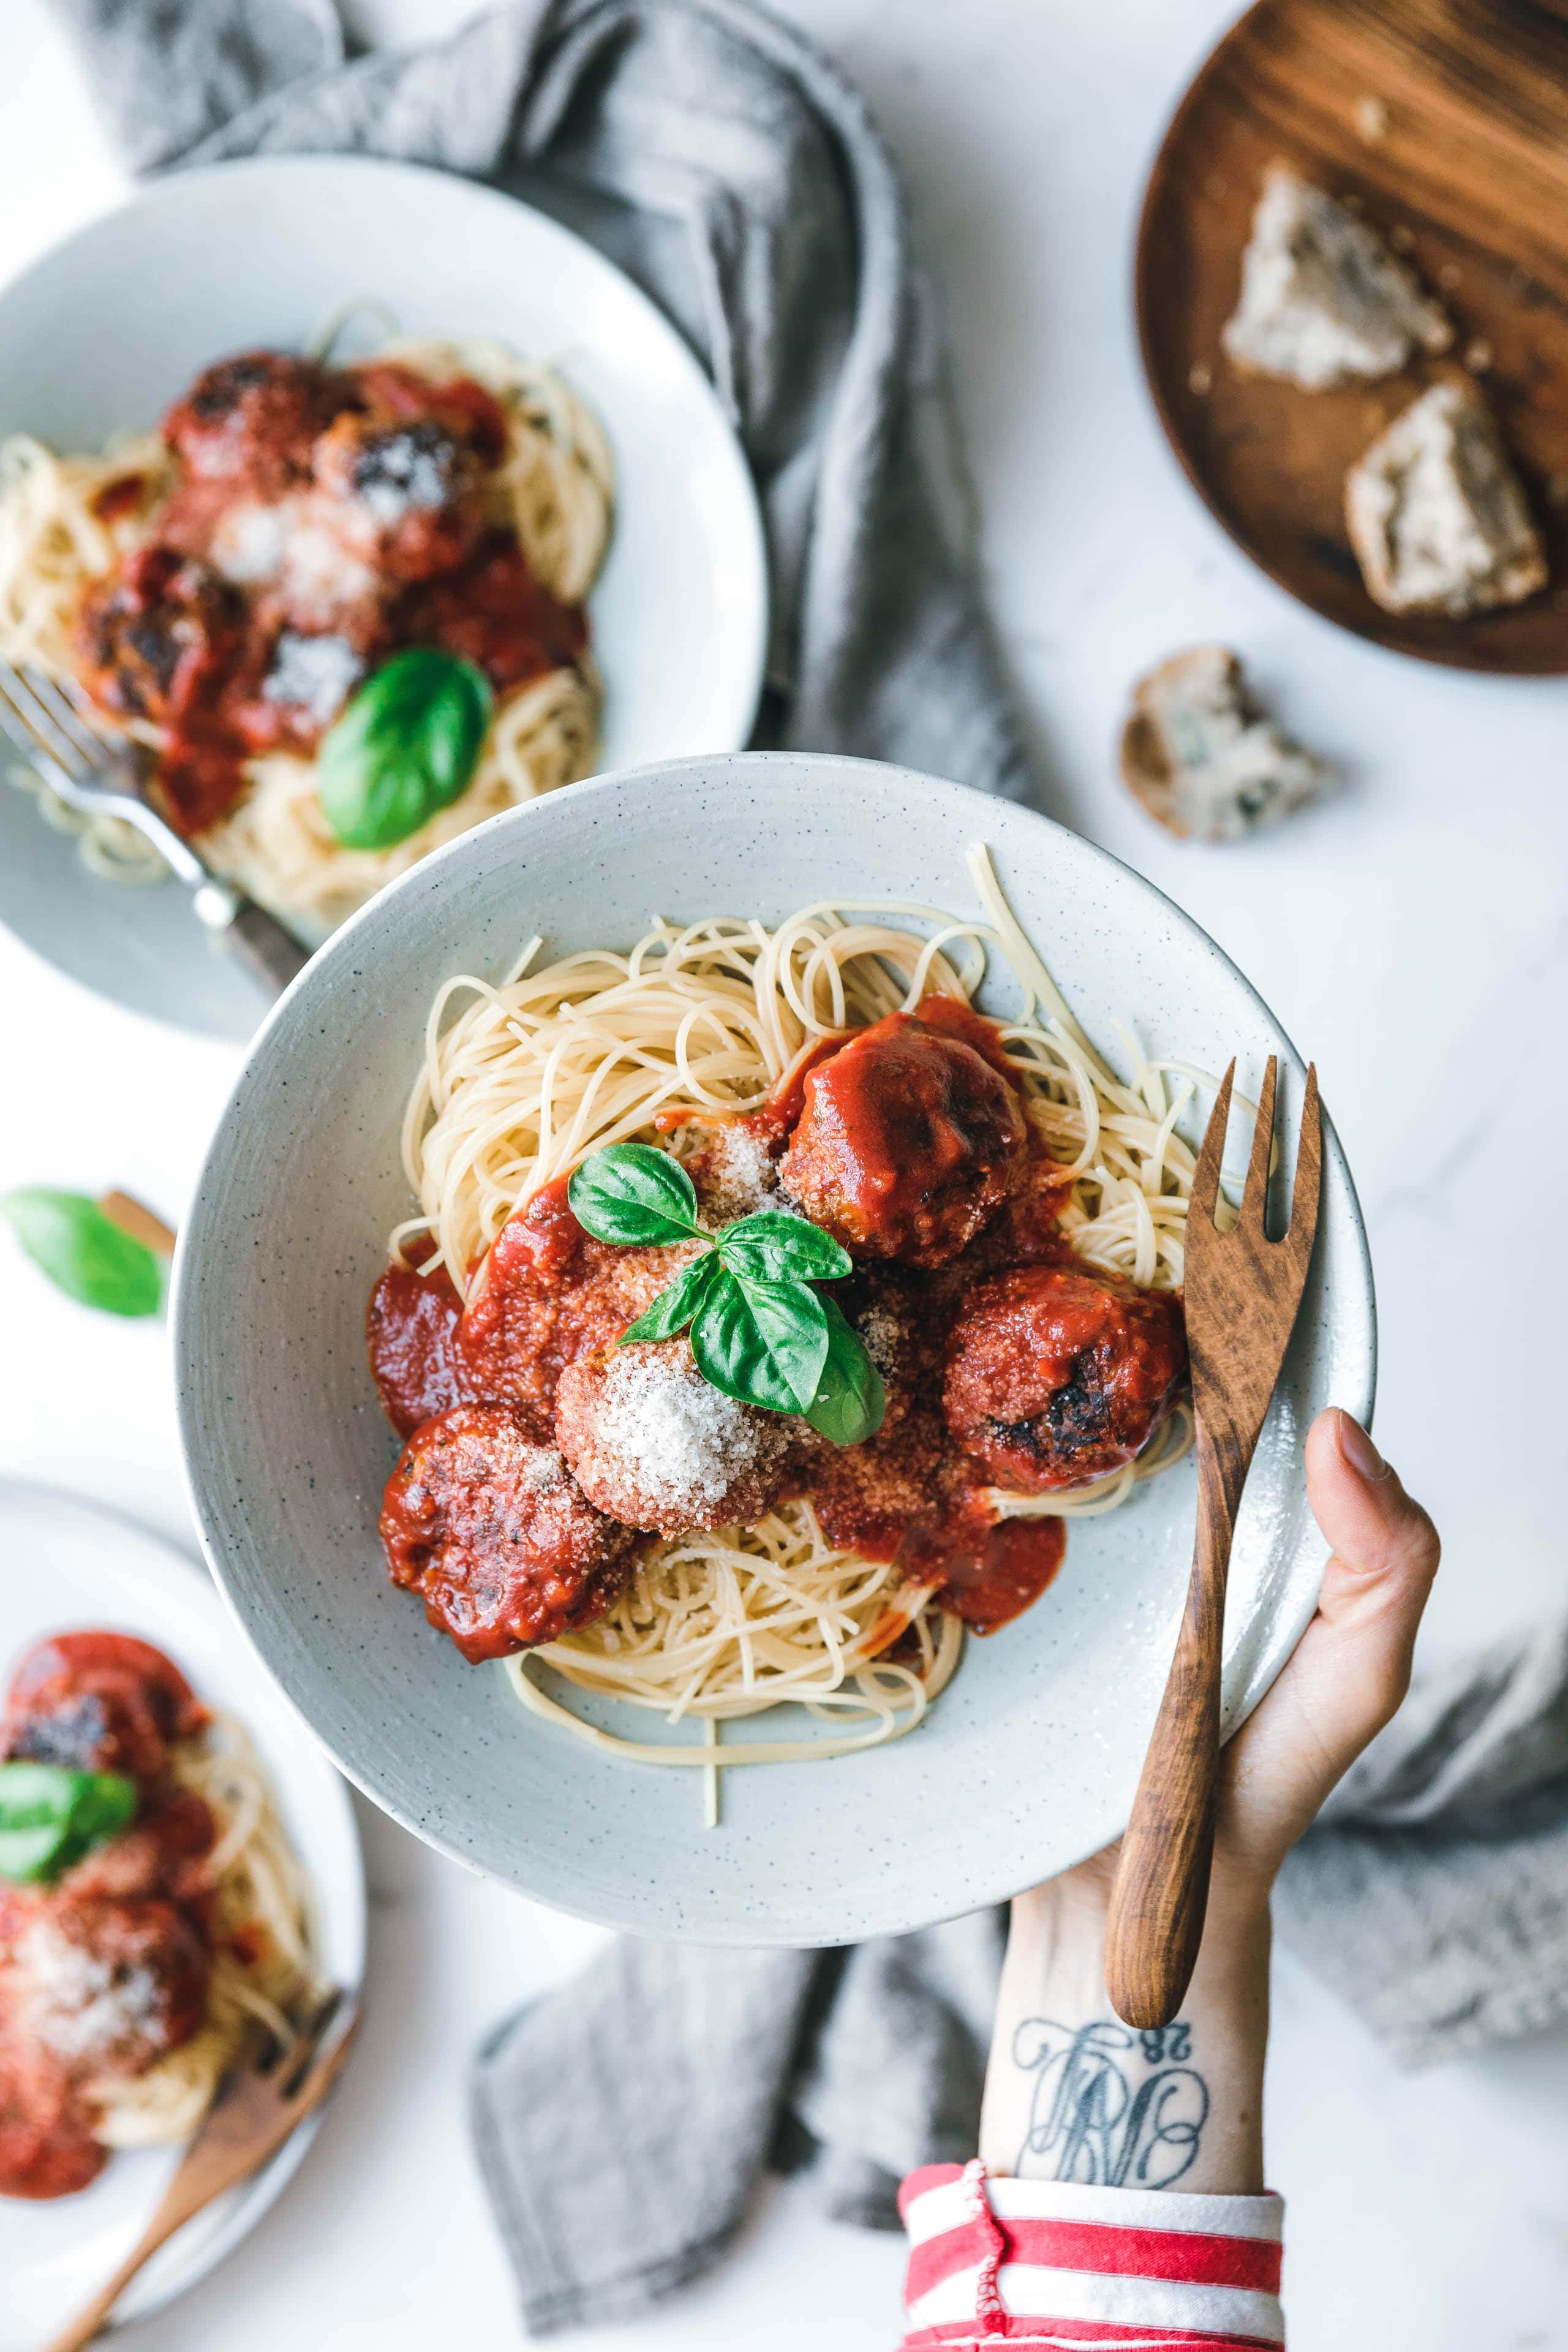 Spaghetti mit veganen Meatballs · Eat this! Vegan Food Blog